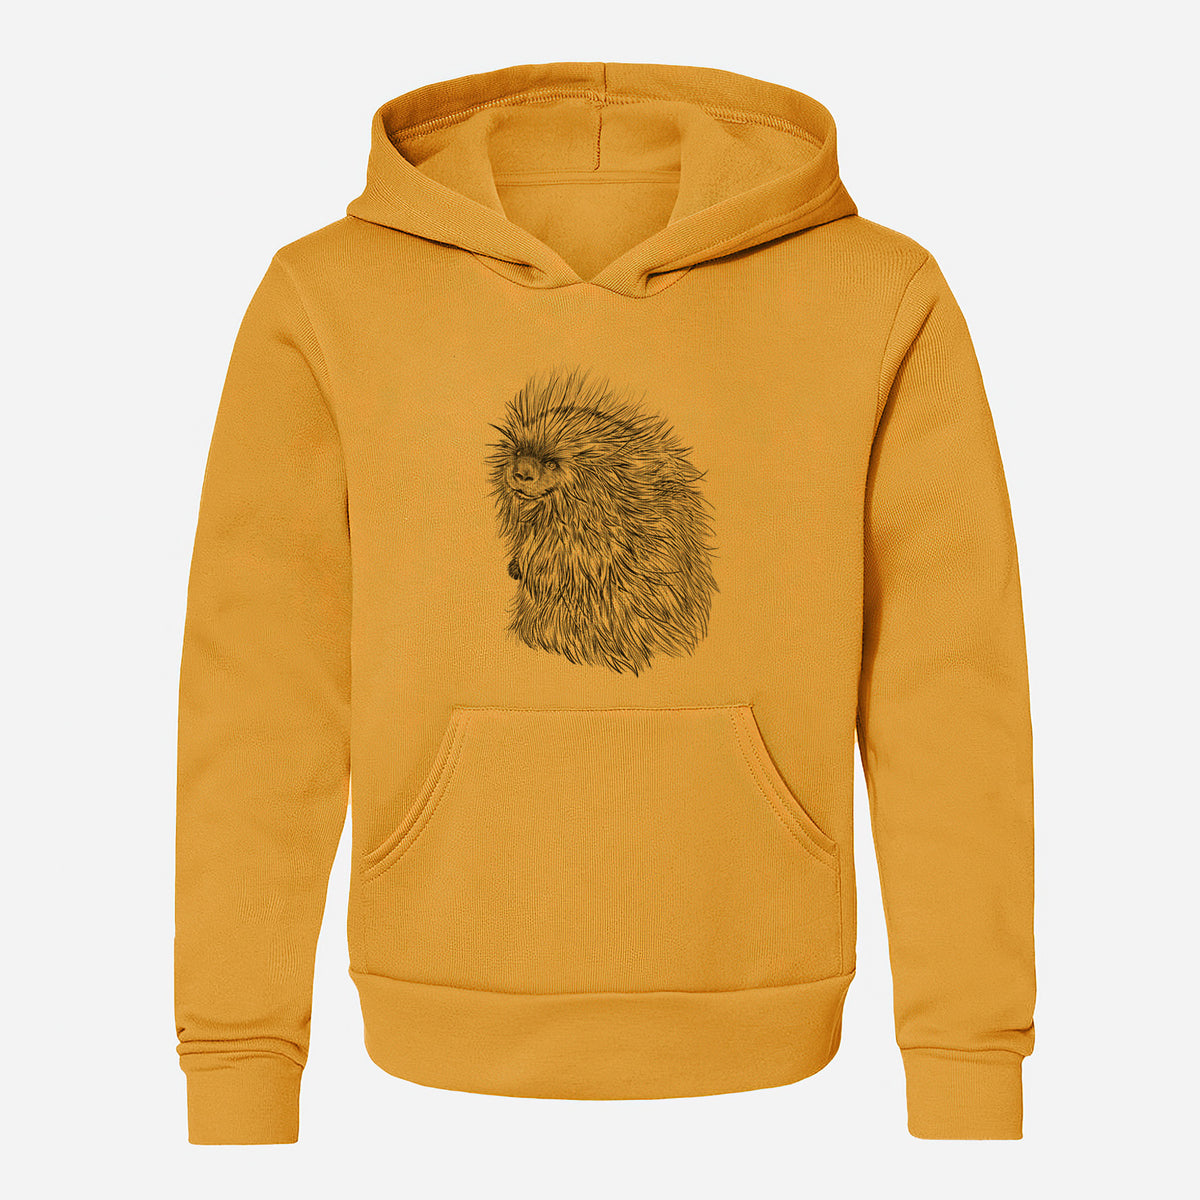 North American Porcupine - Erethizon dorsatum - Youth Hoodie Sweatshirt